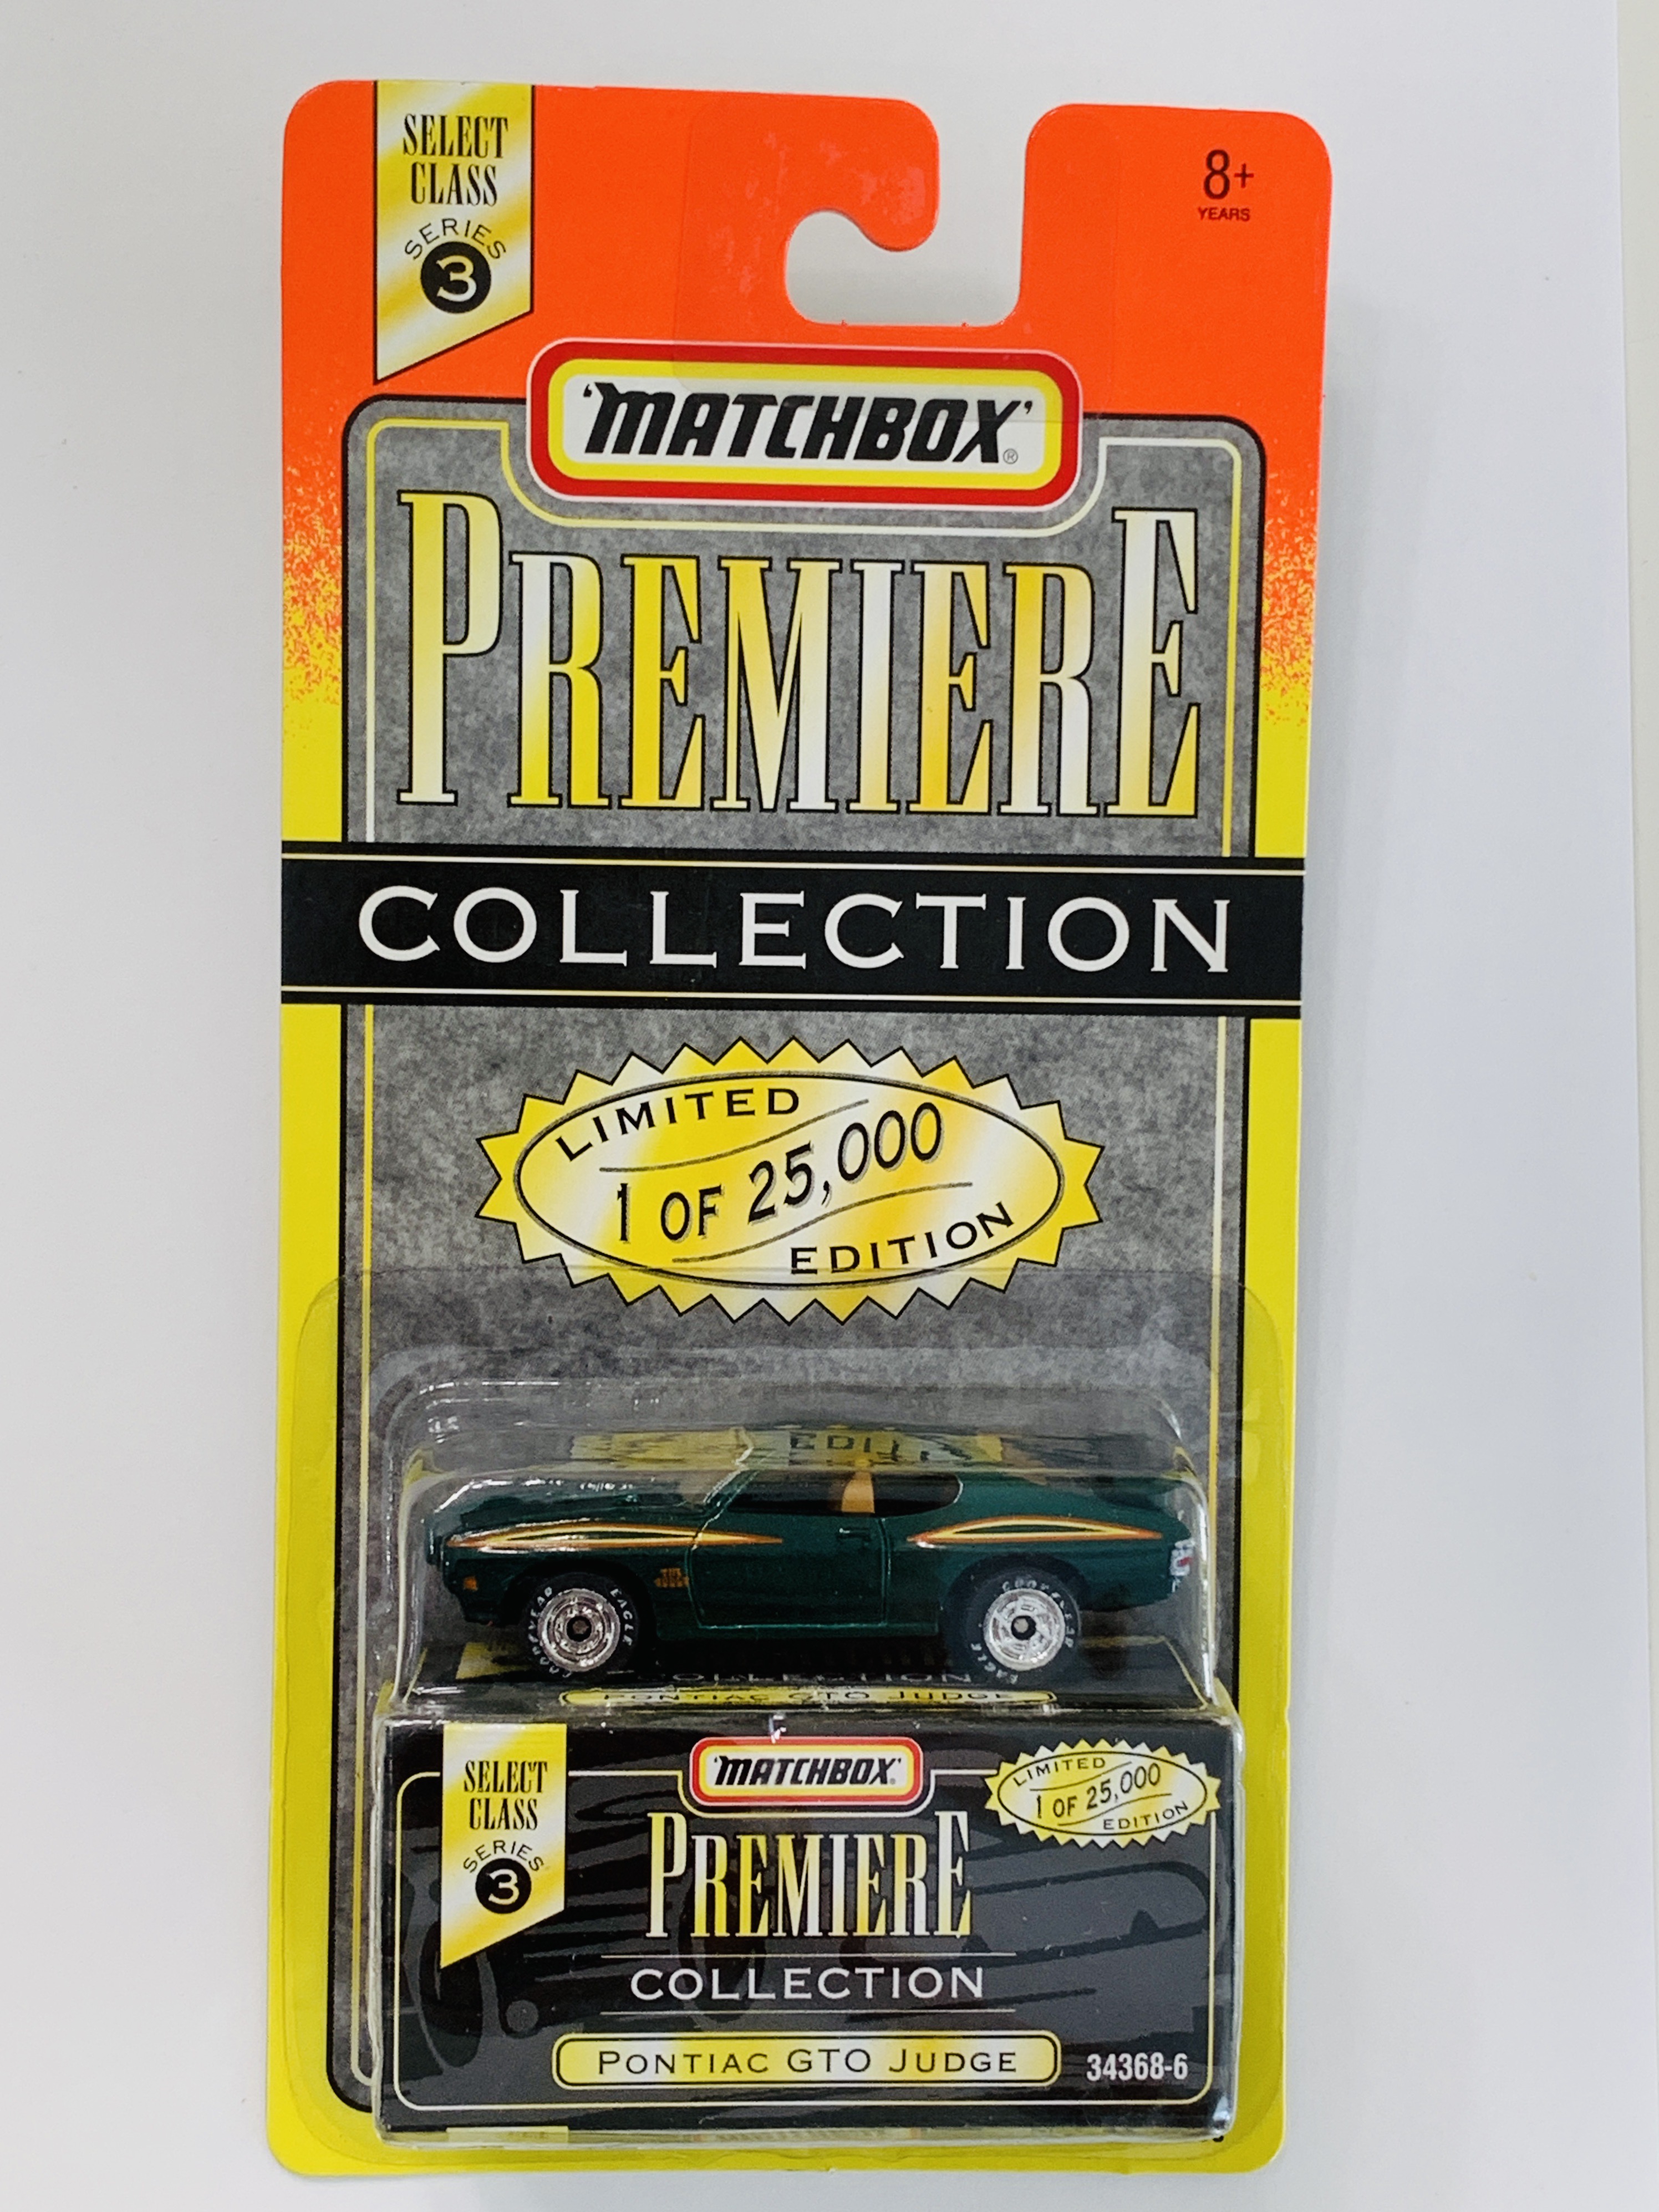 Matchbox Premiere Select Class Series 3 Pontiac GTO Judge